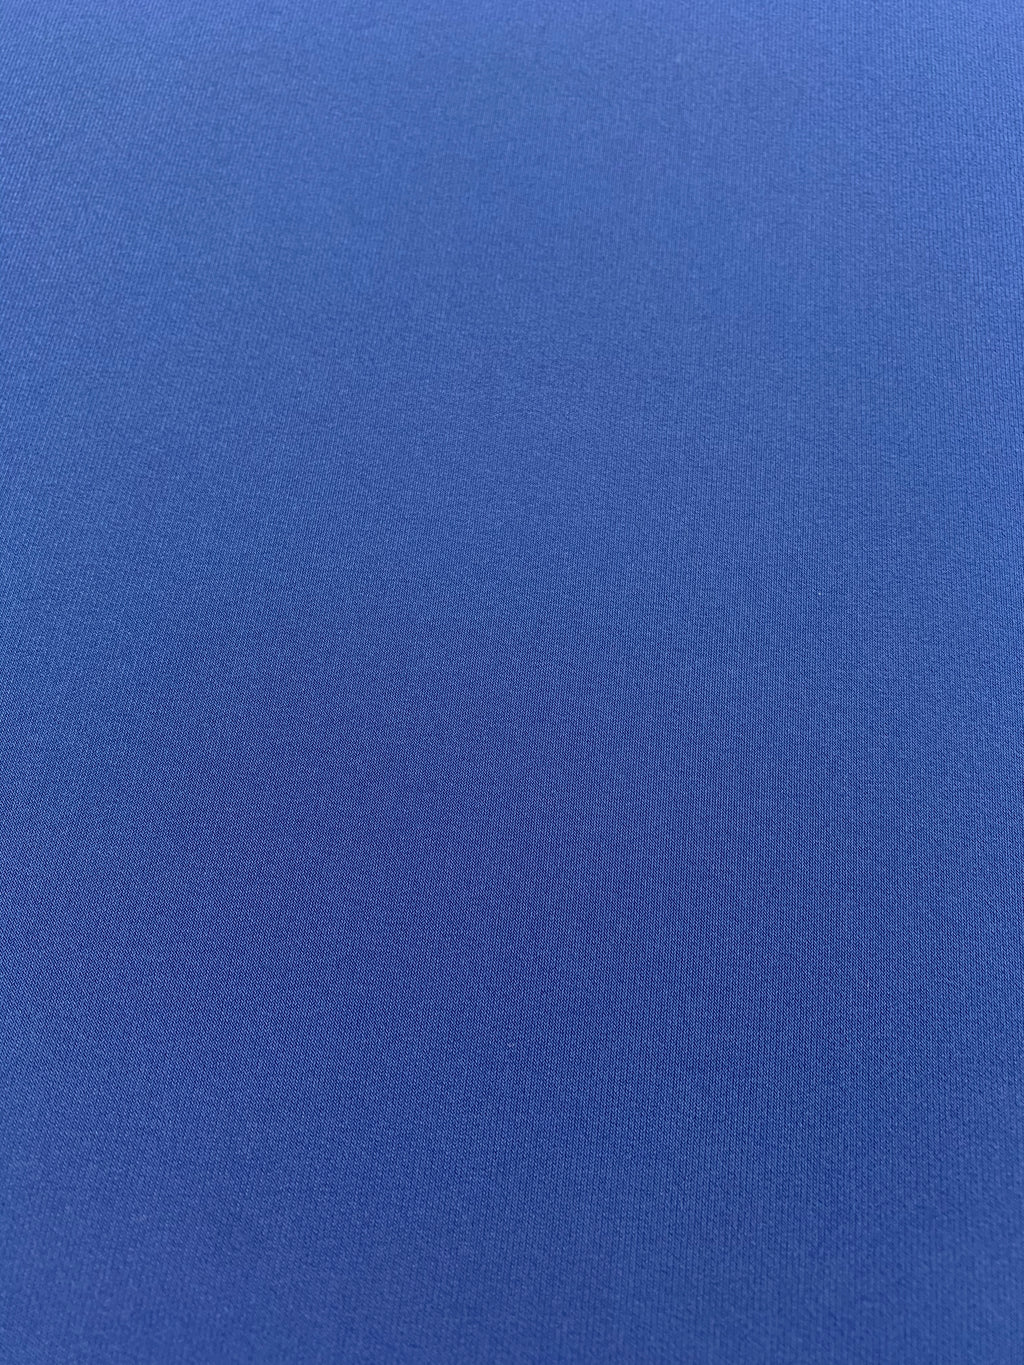 Azure Blue Lycra